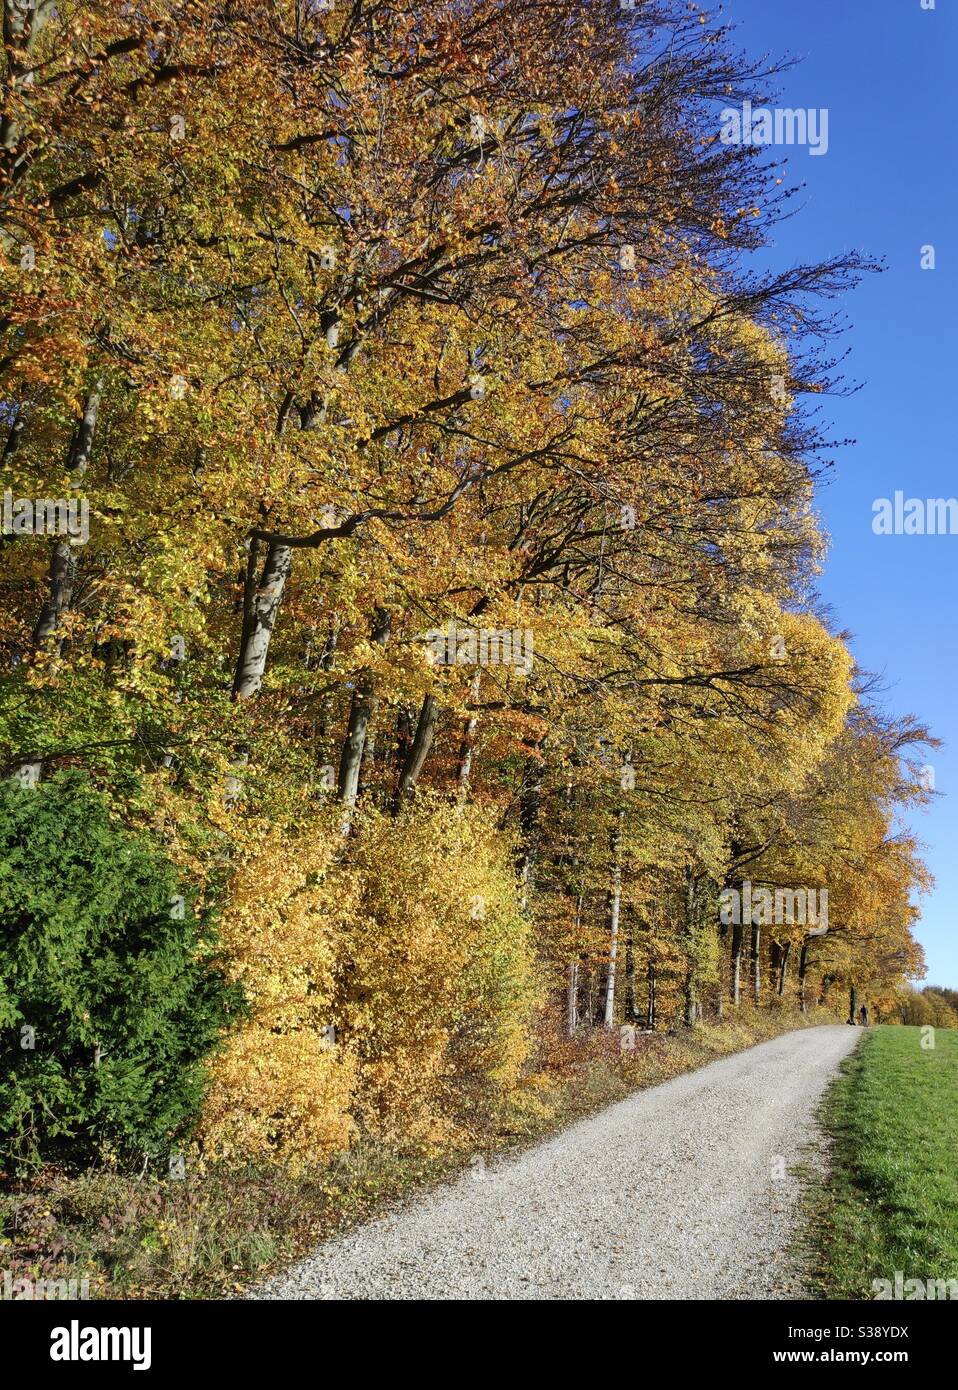 Autumn colors in Bielefeld, Germany Stock Photo